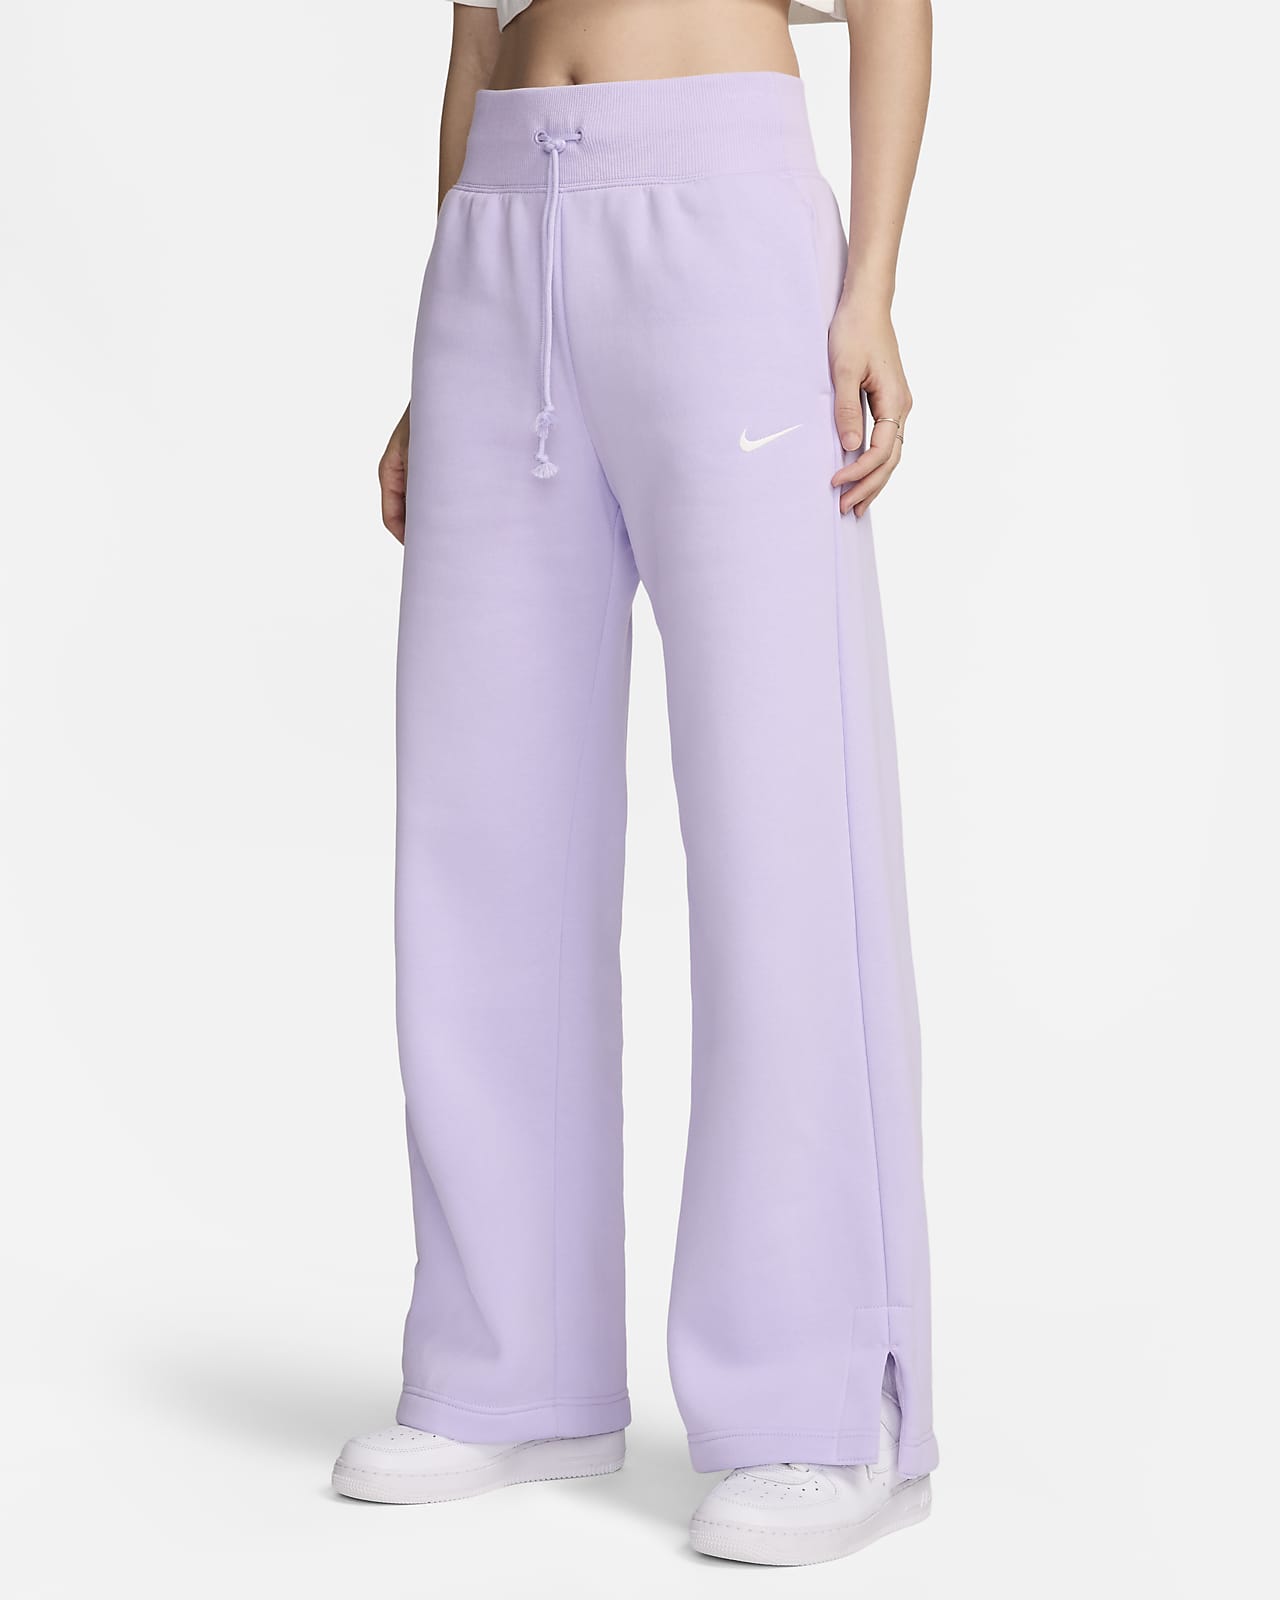 Nike Sportswear Phoenix Fleece Pantalons de xandall amb cintura alta i camals amples - Dona